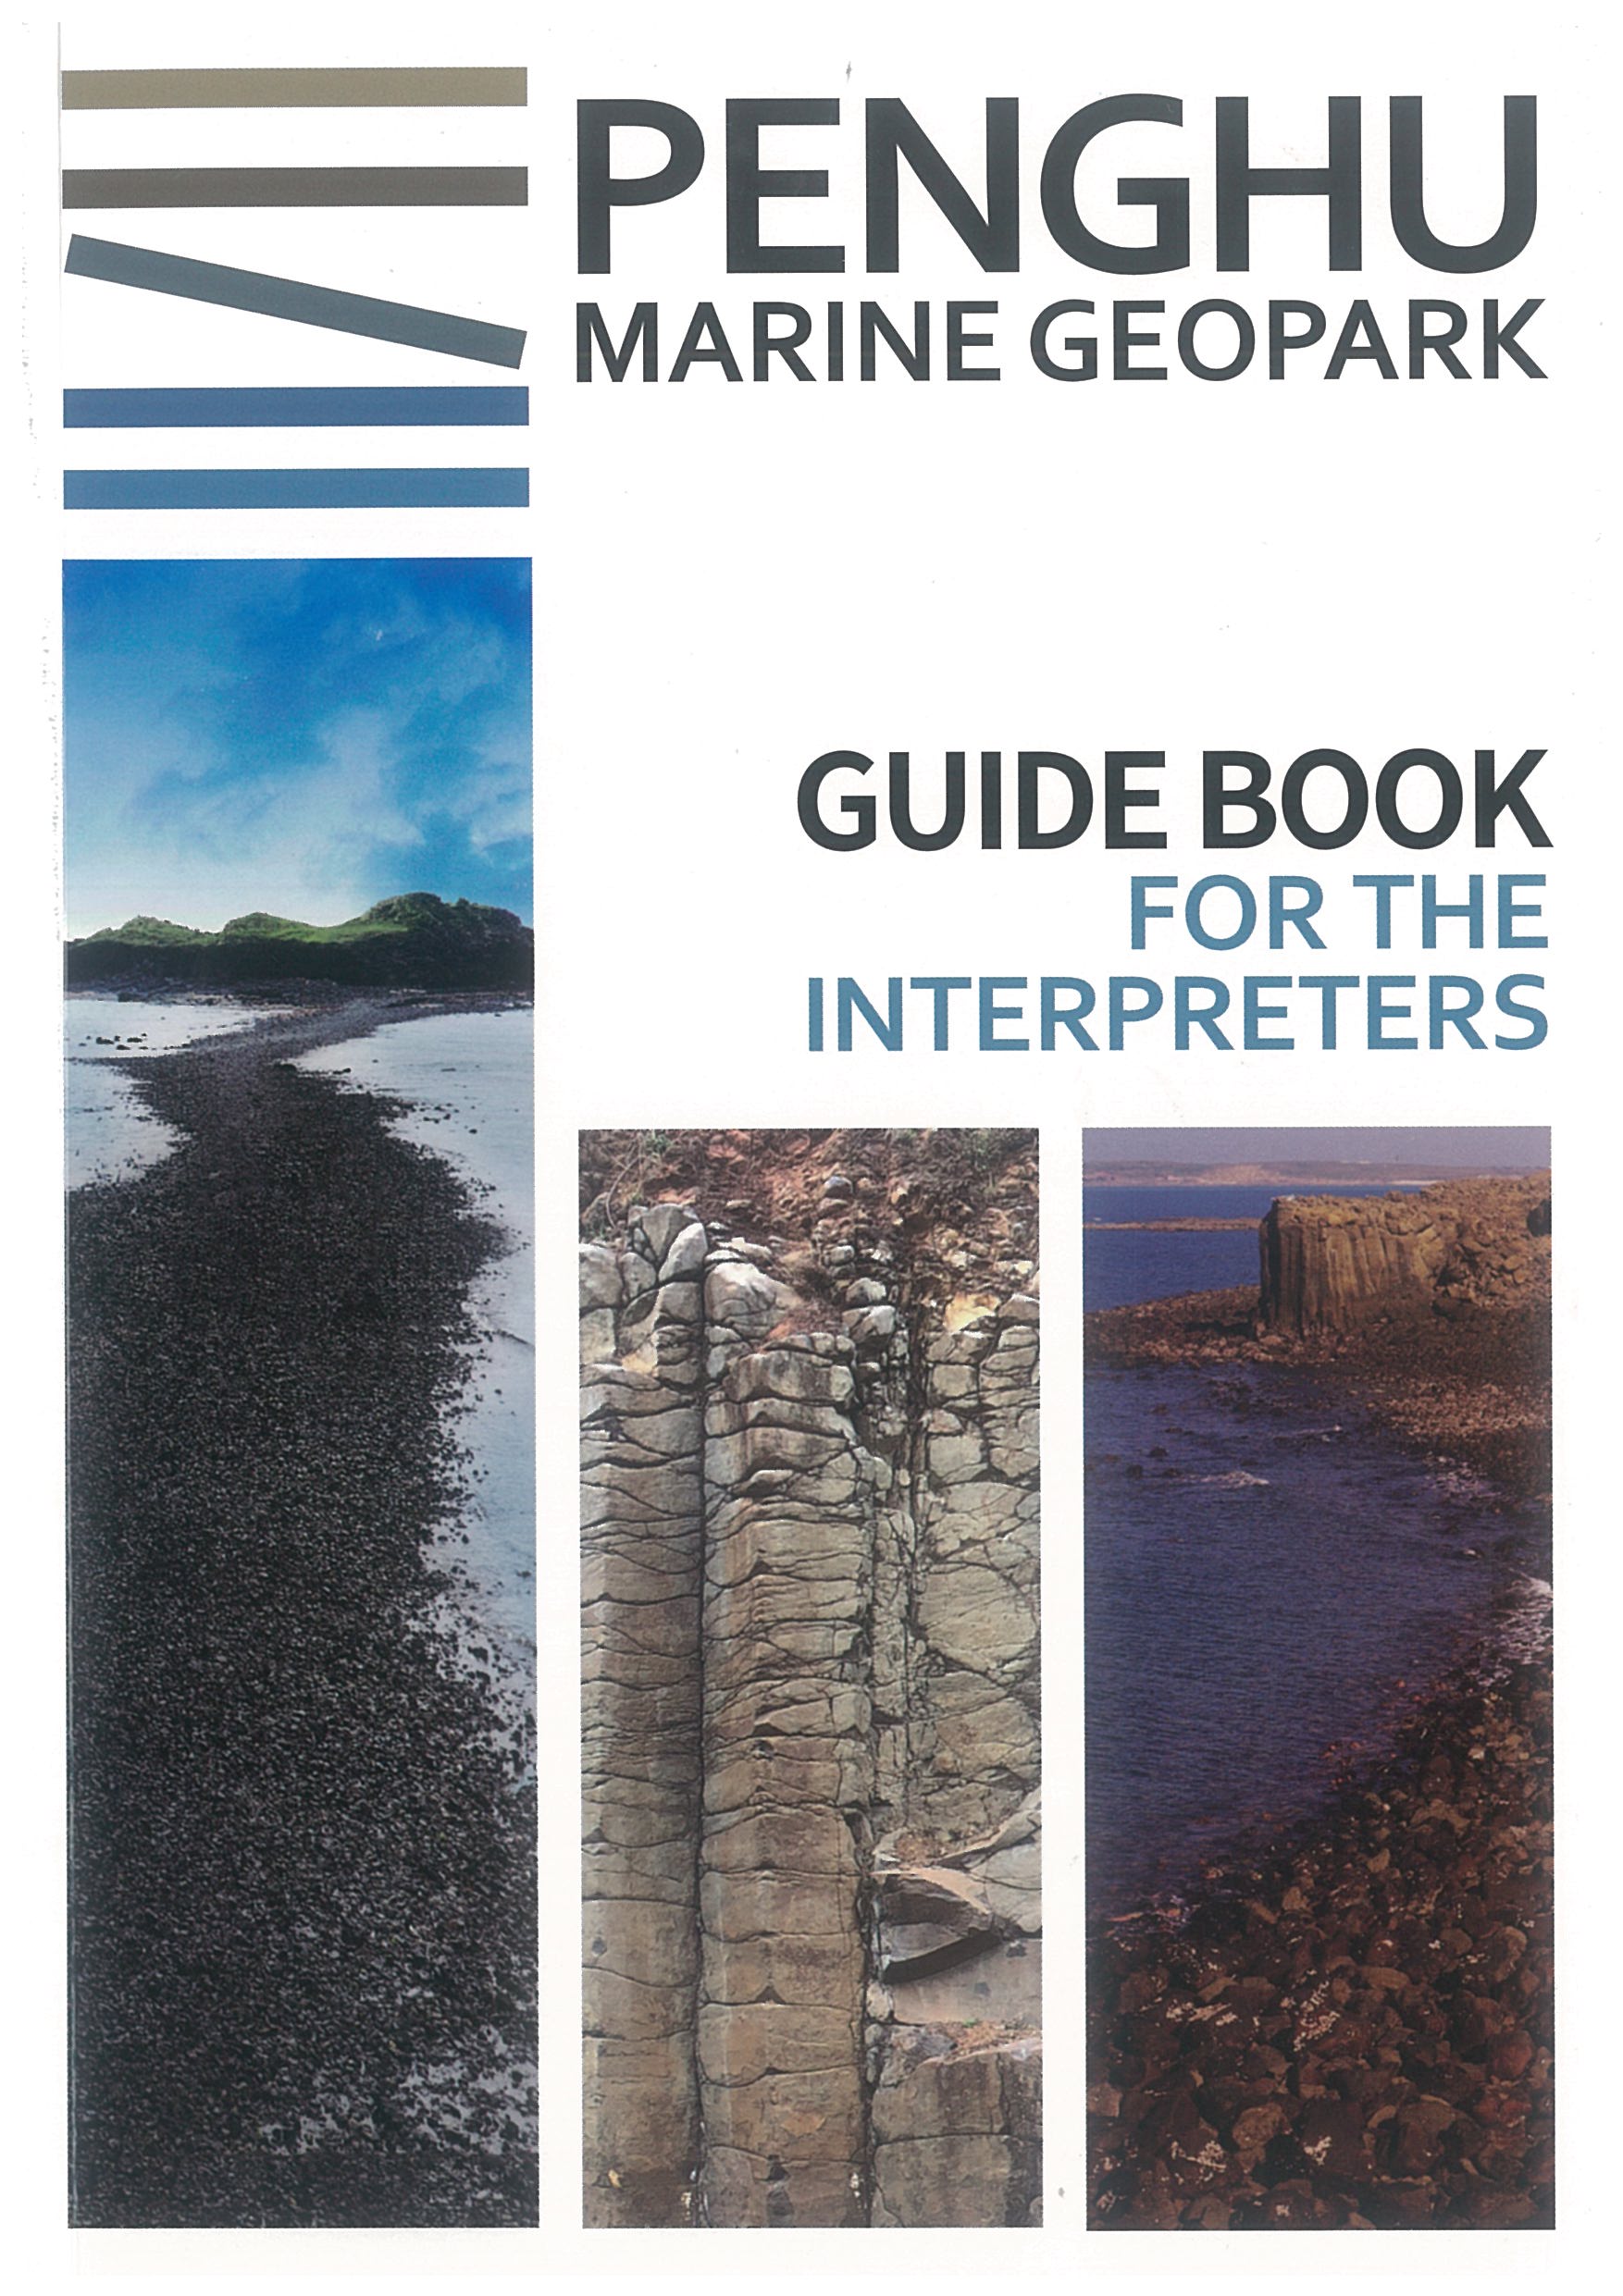 Guide book for the interpreters, Penghu Marine Geopark